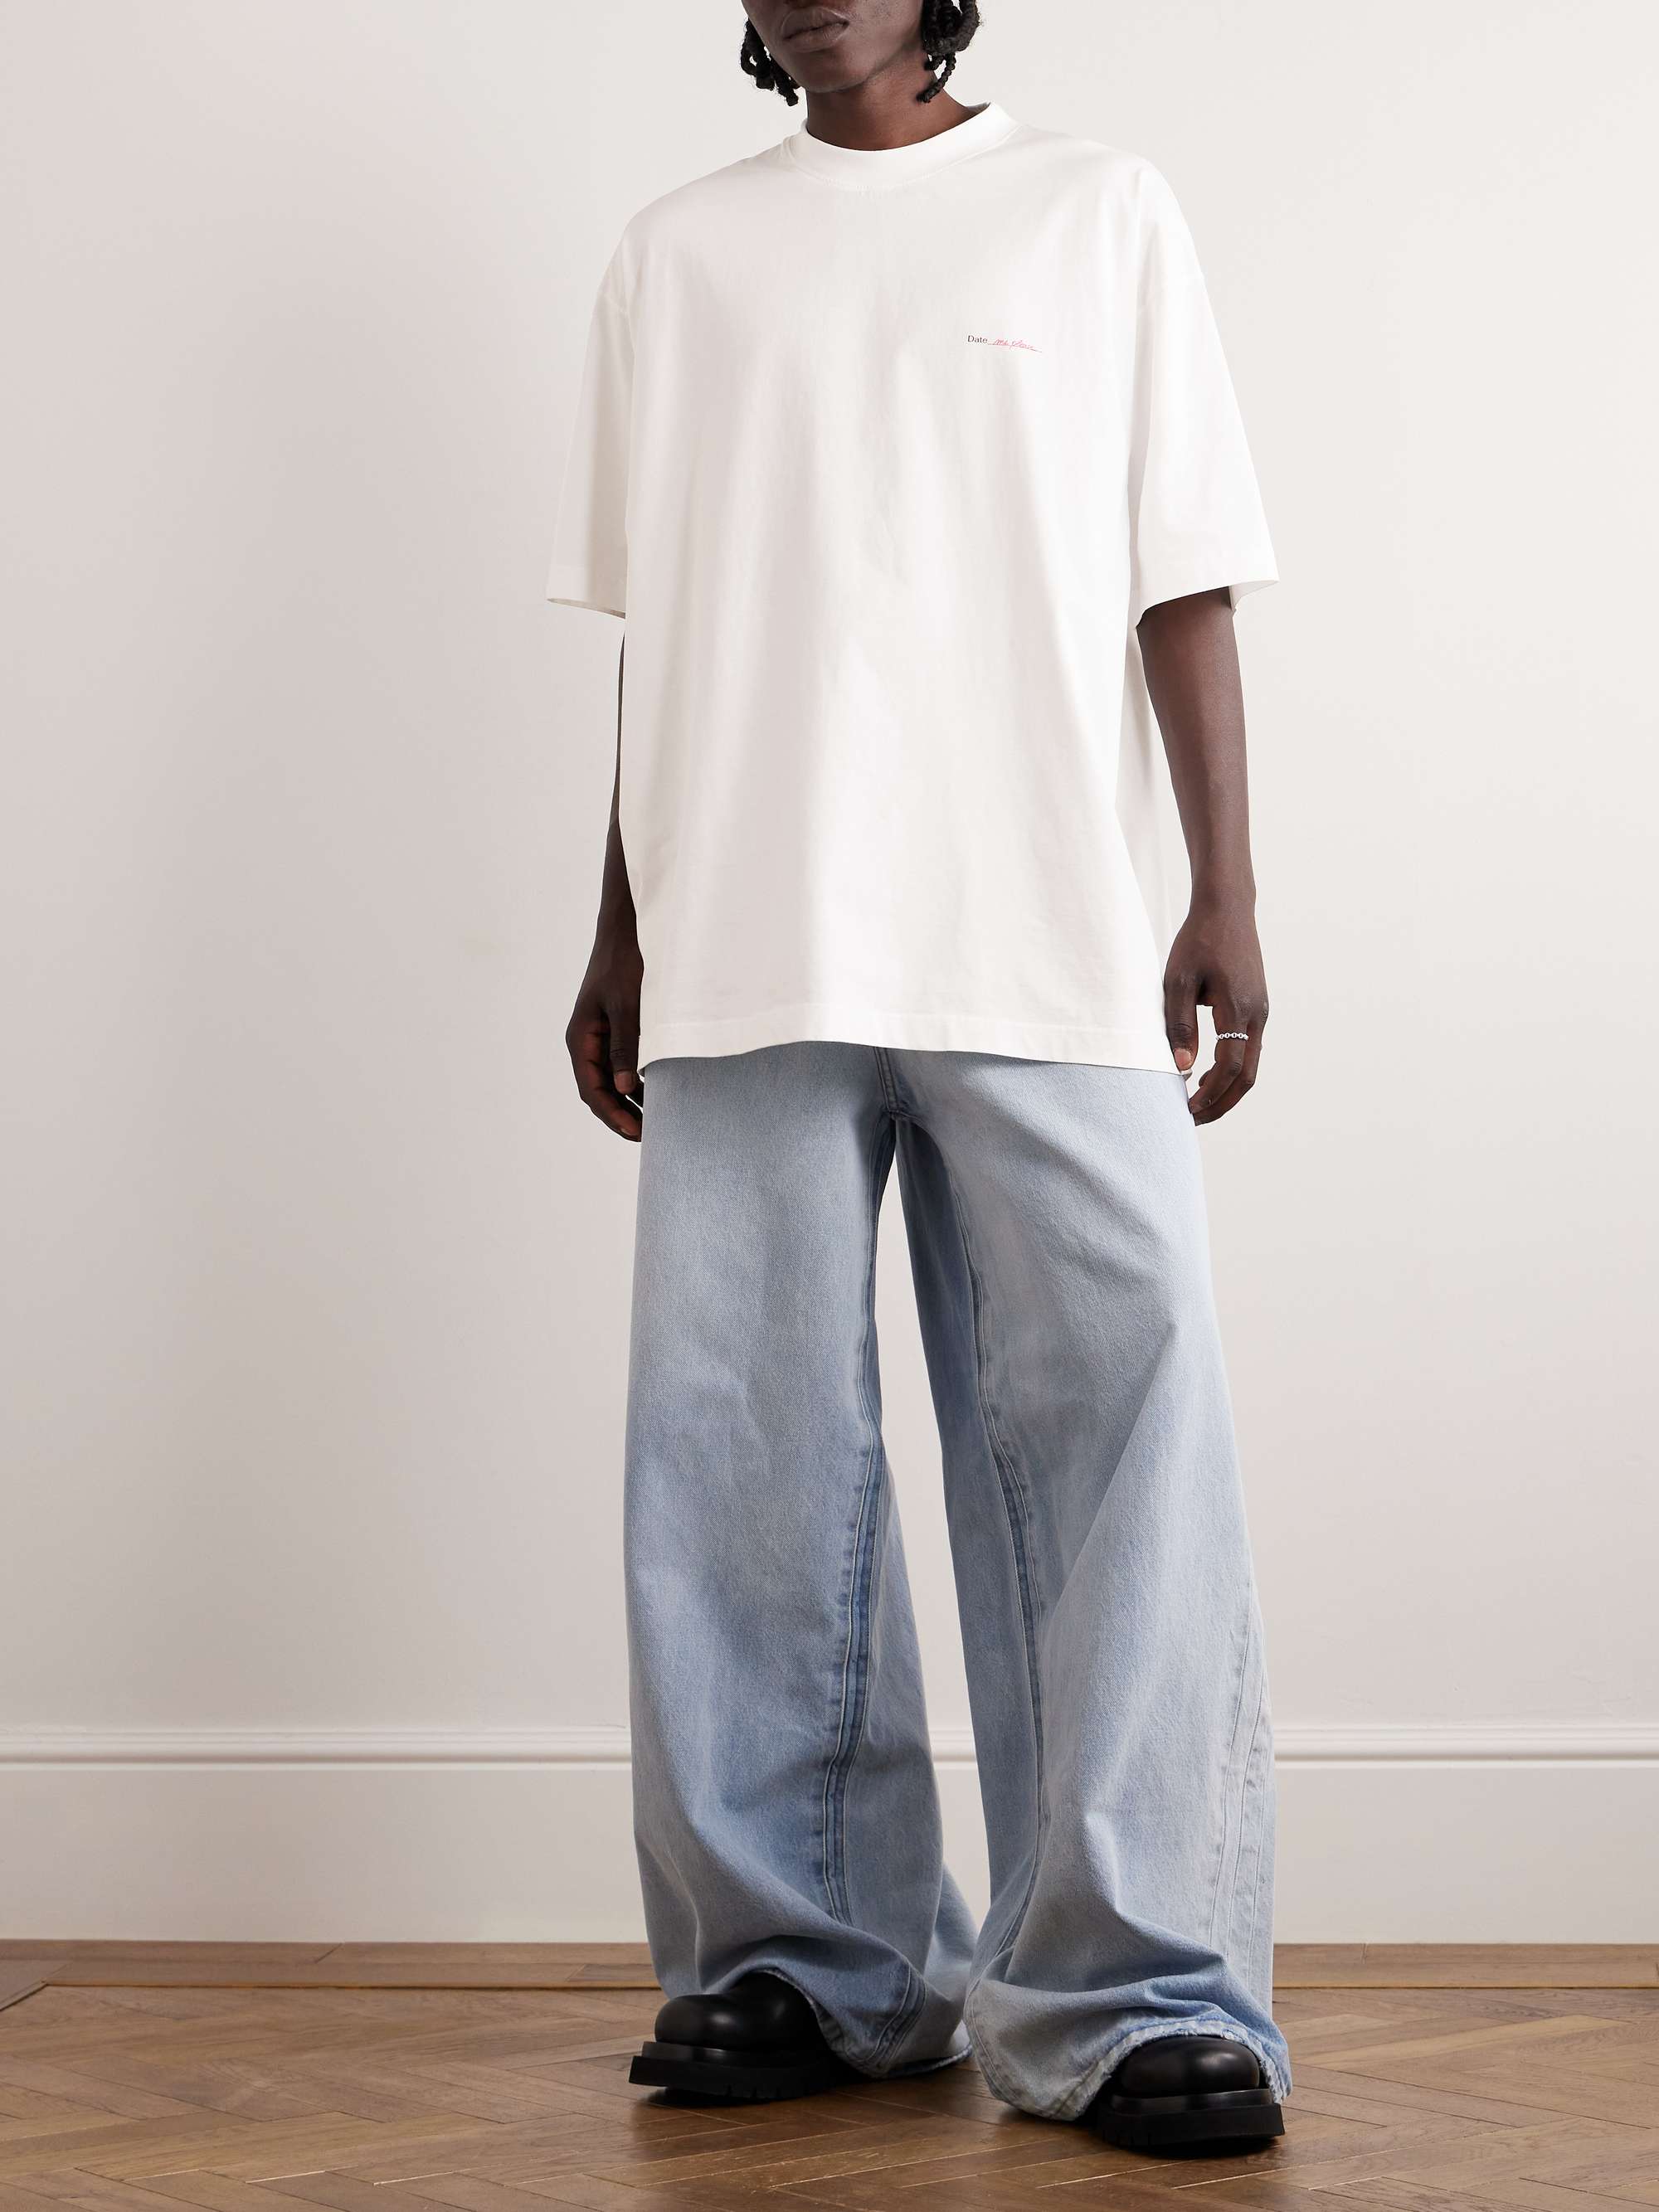 VETEMENTS Printed Cotton-Jersey T-Shirt for Men | MR PORTER